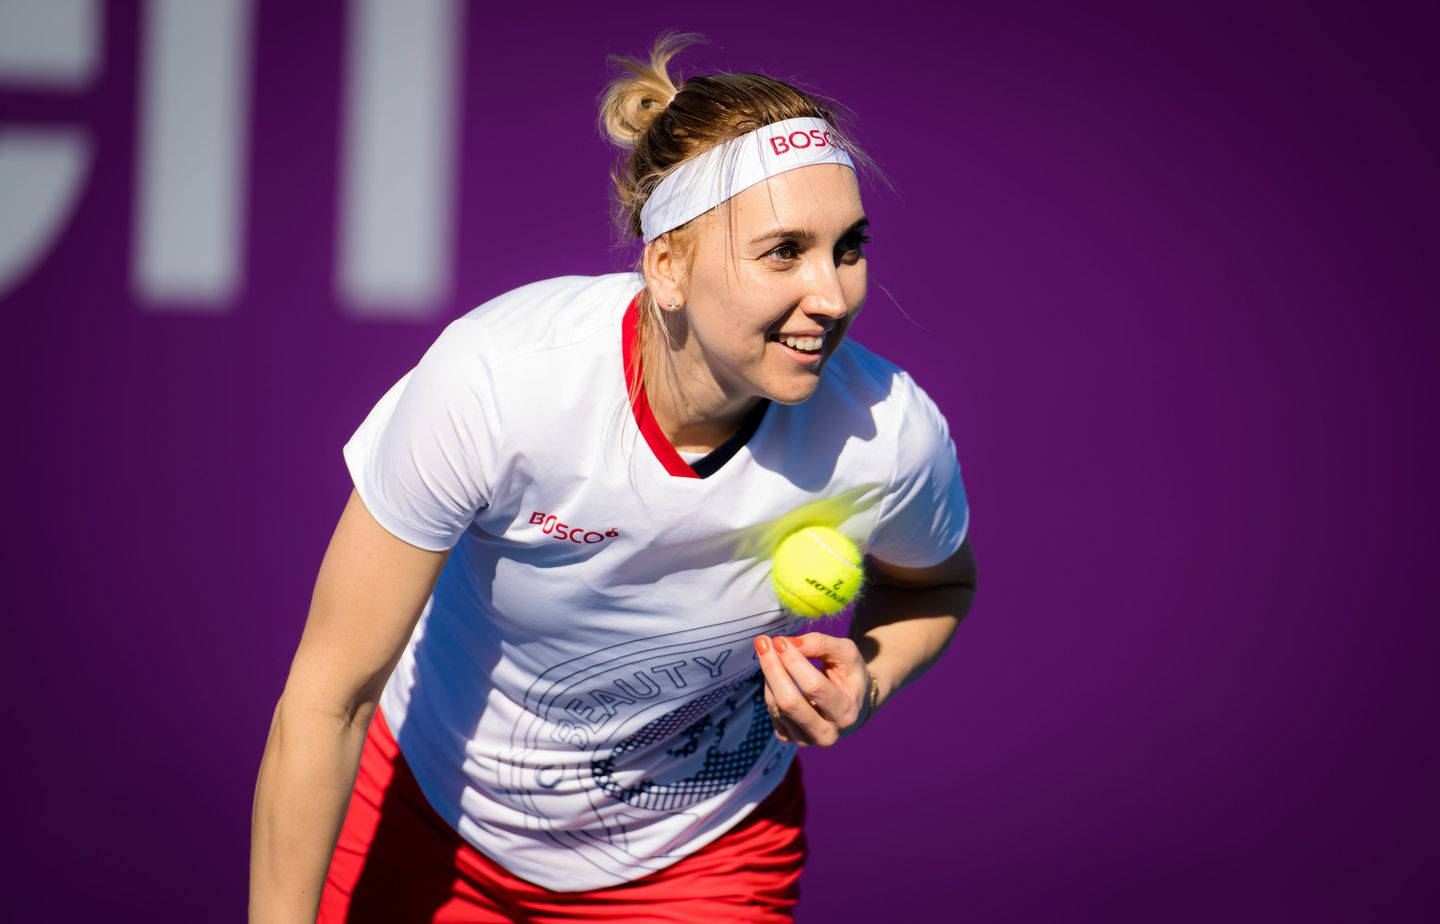 Bright Smiling Elena Vesnina Holding a Tennis Ball Wallpaper